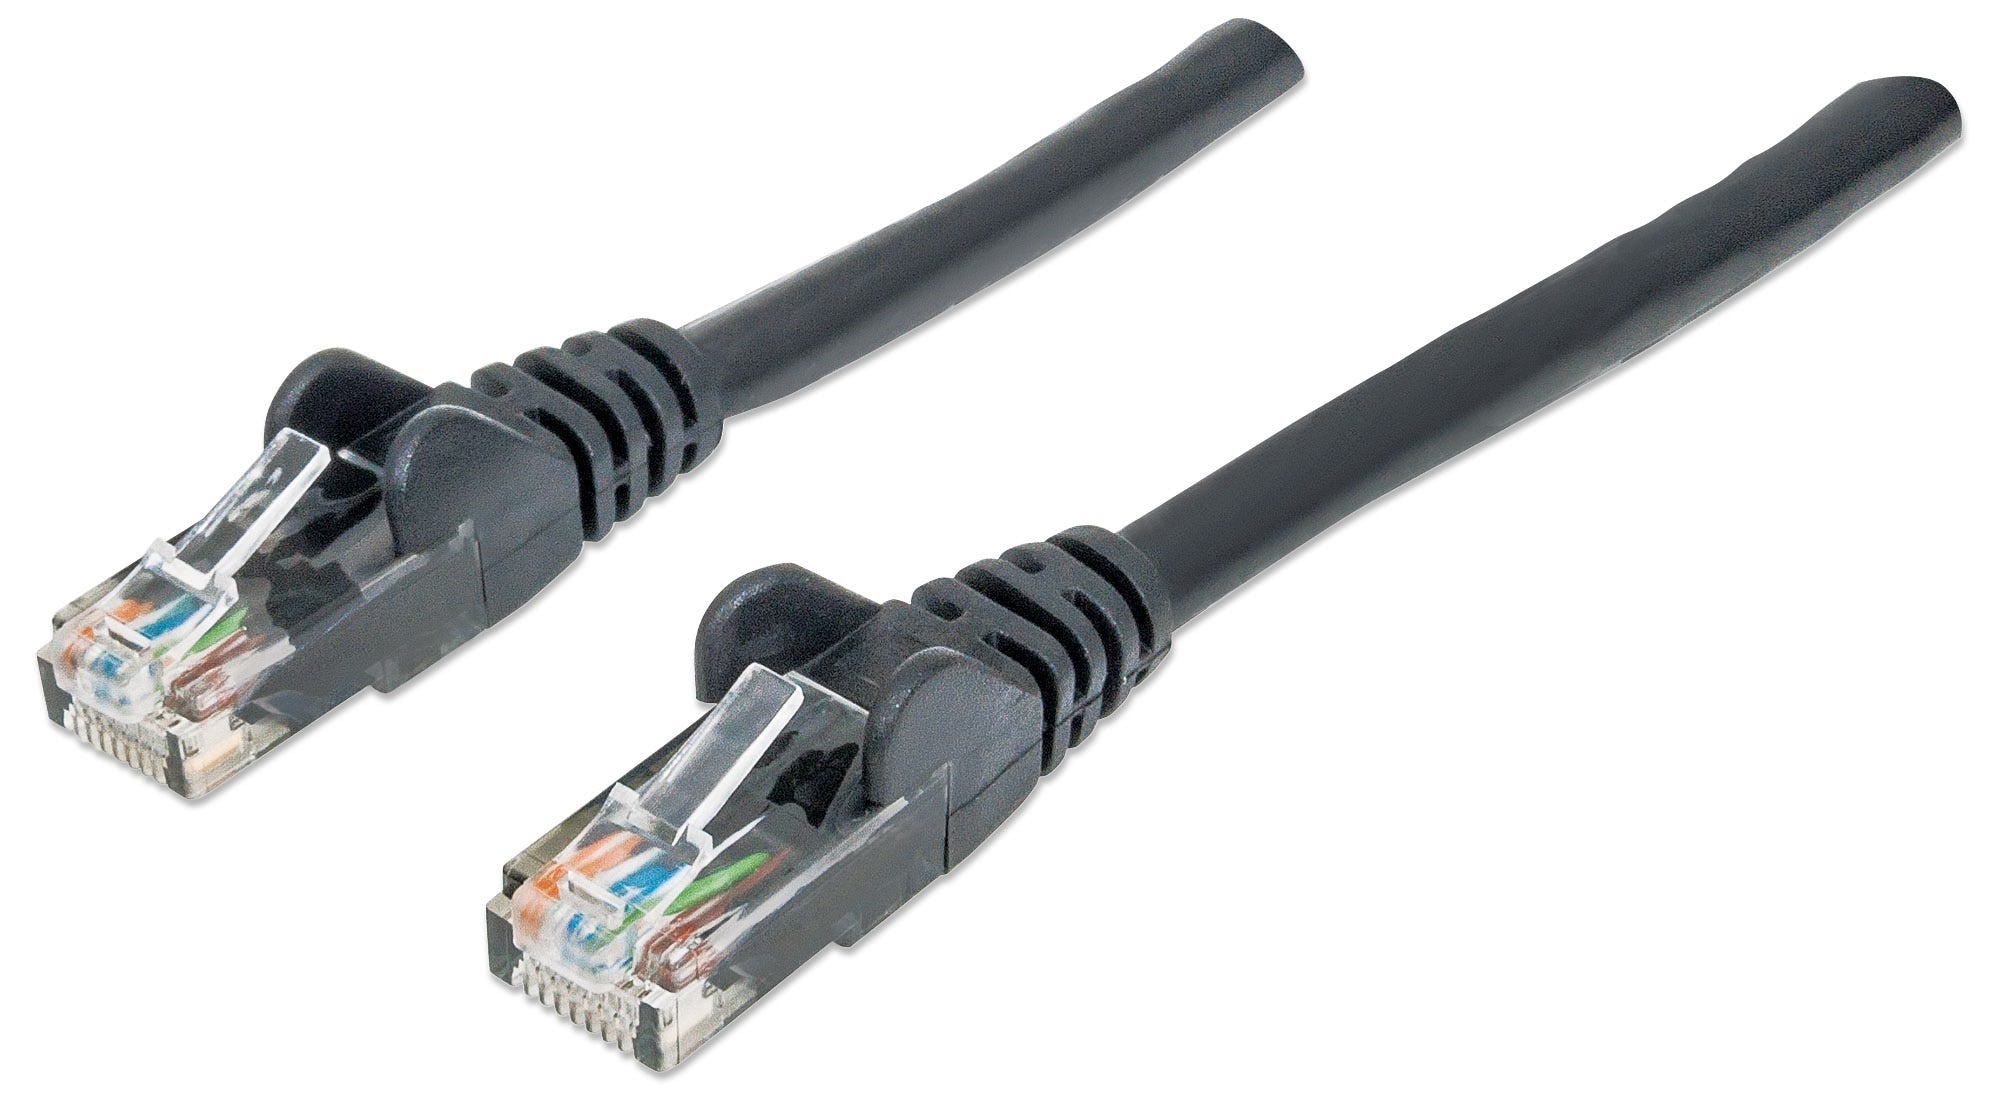 Cable De Red Intellinet 342049 Cat6 1 M Rj-45 Macho/Macho Negro